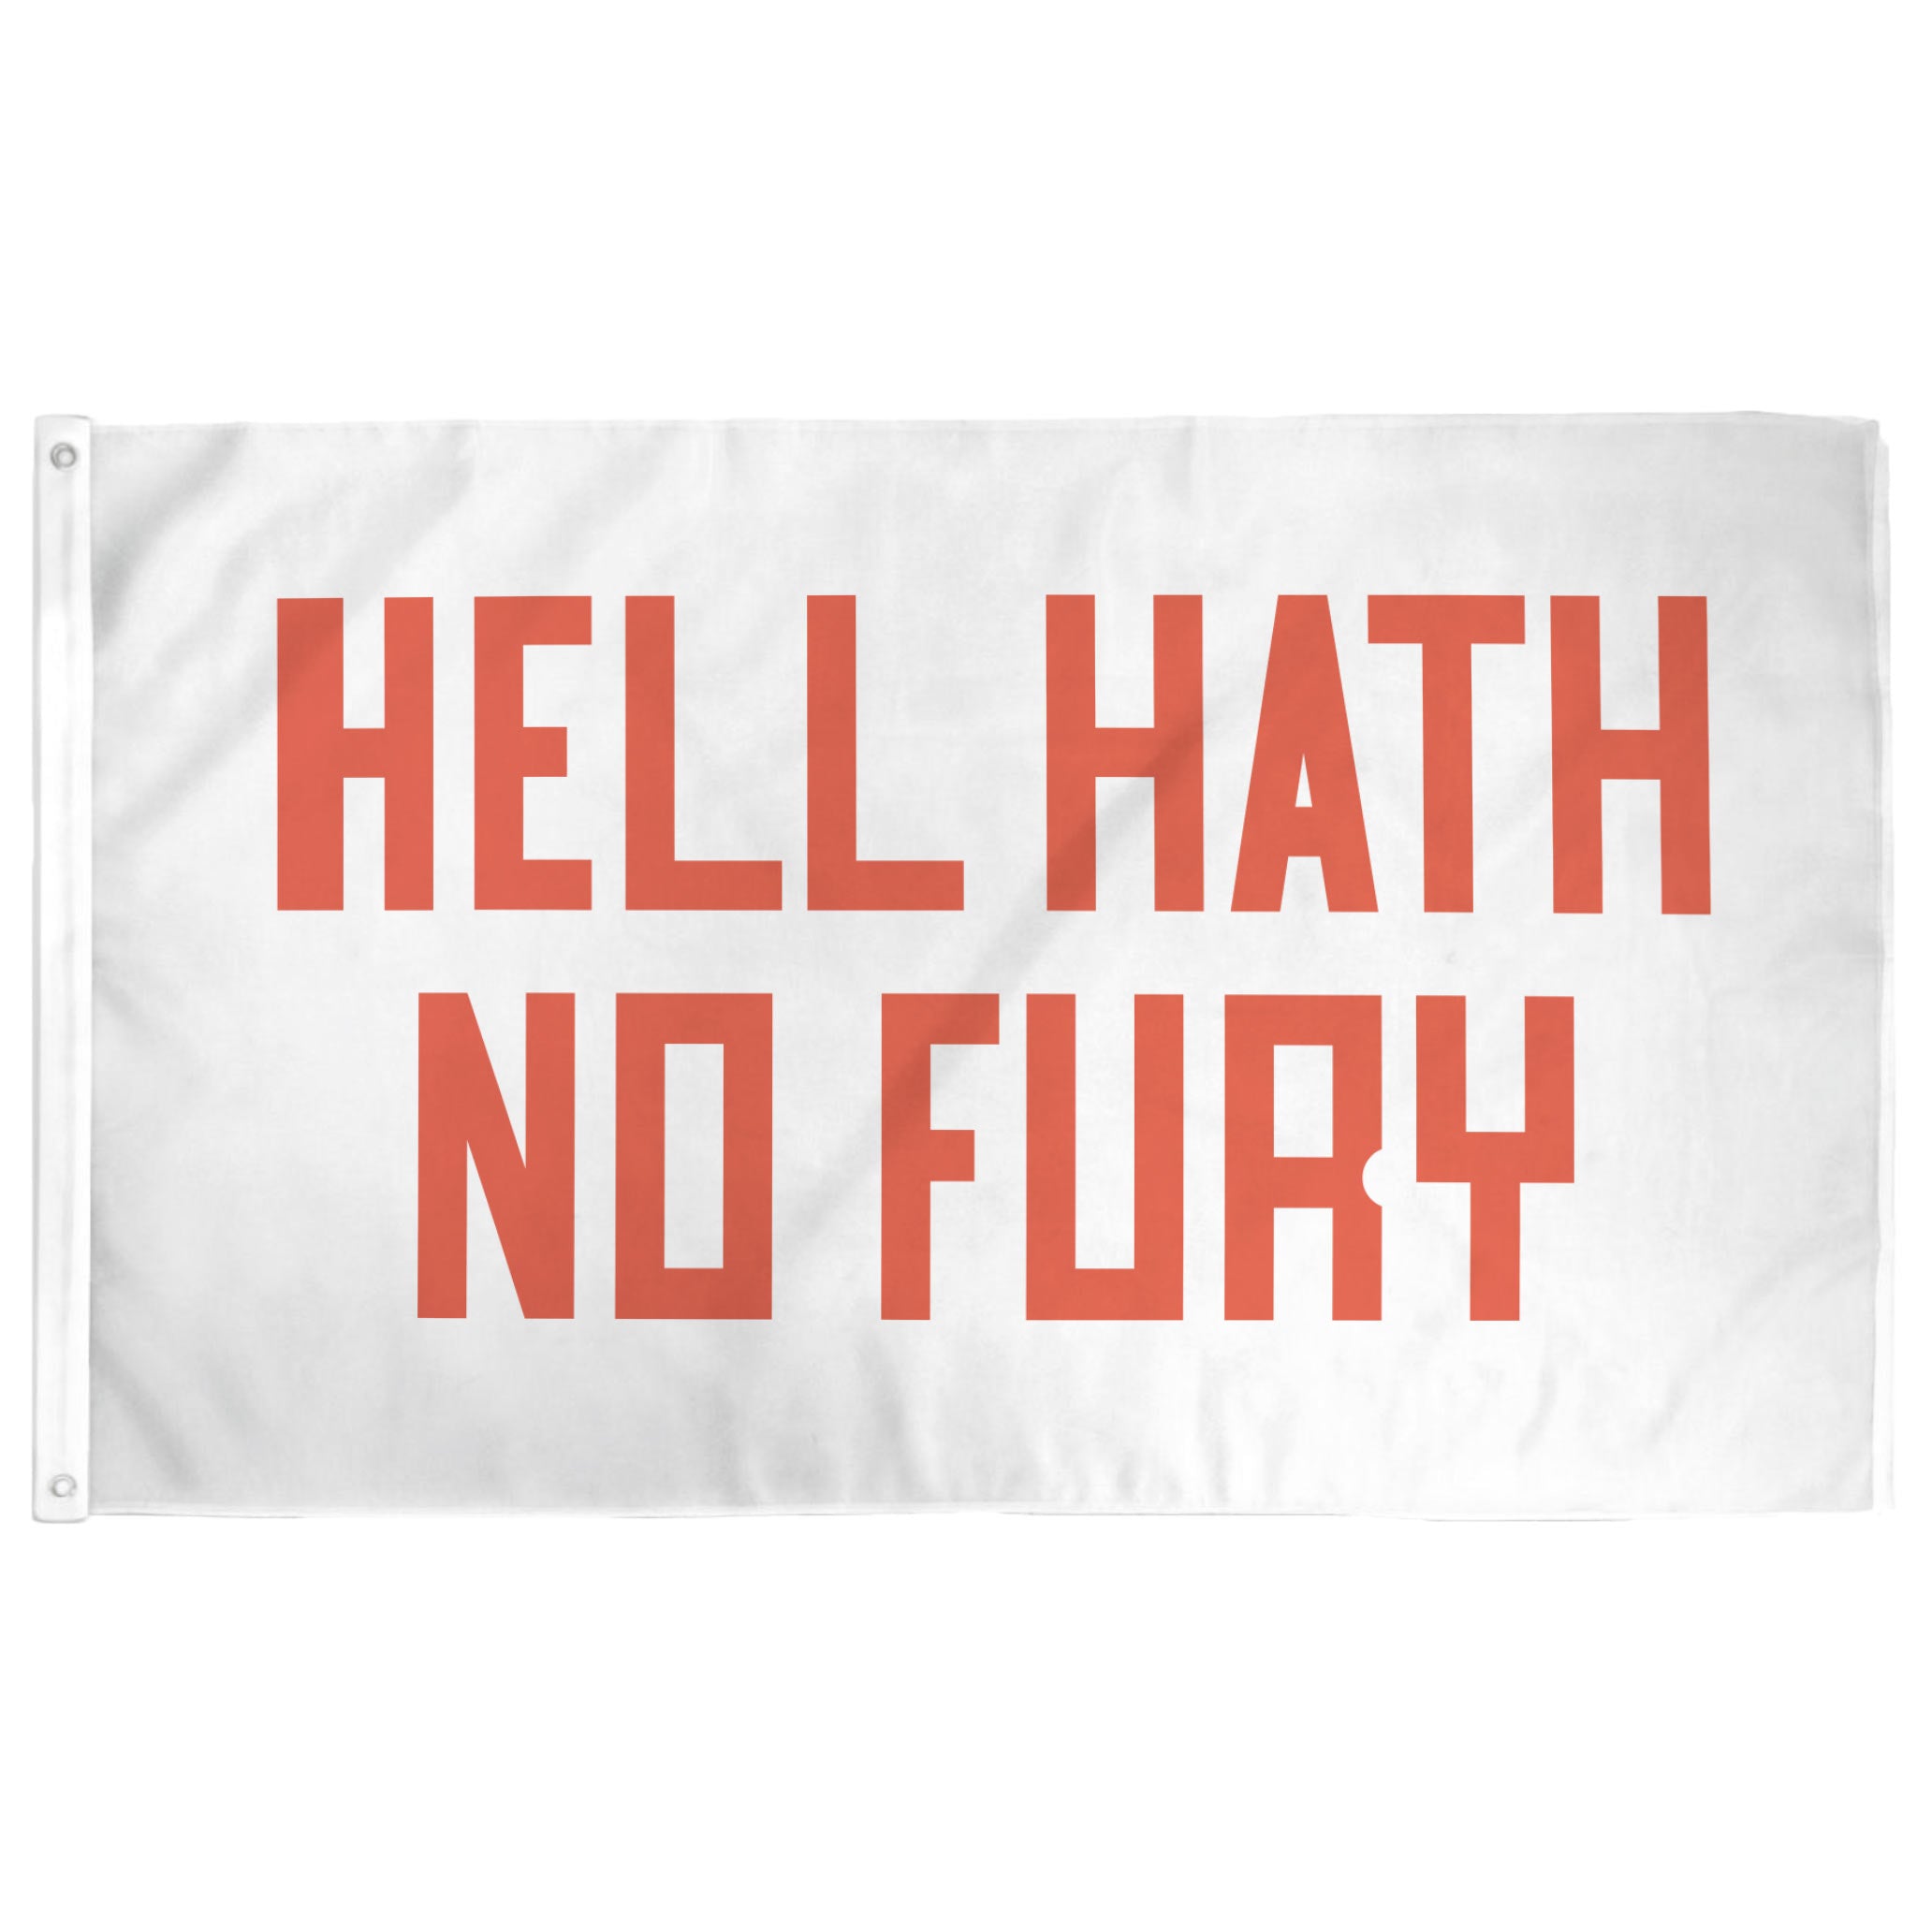 Hell hath no fury like 666 and a half. : r/DankMemesFromSite19